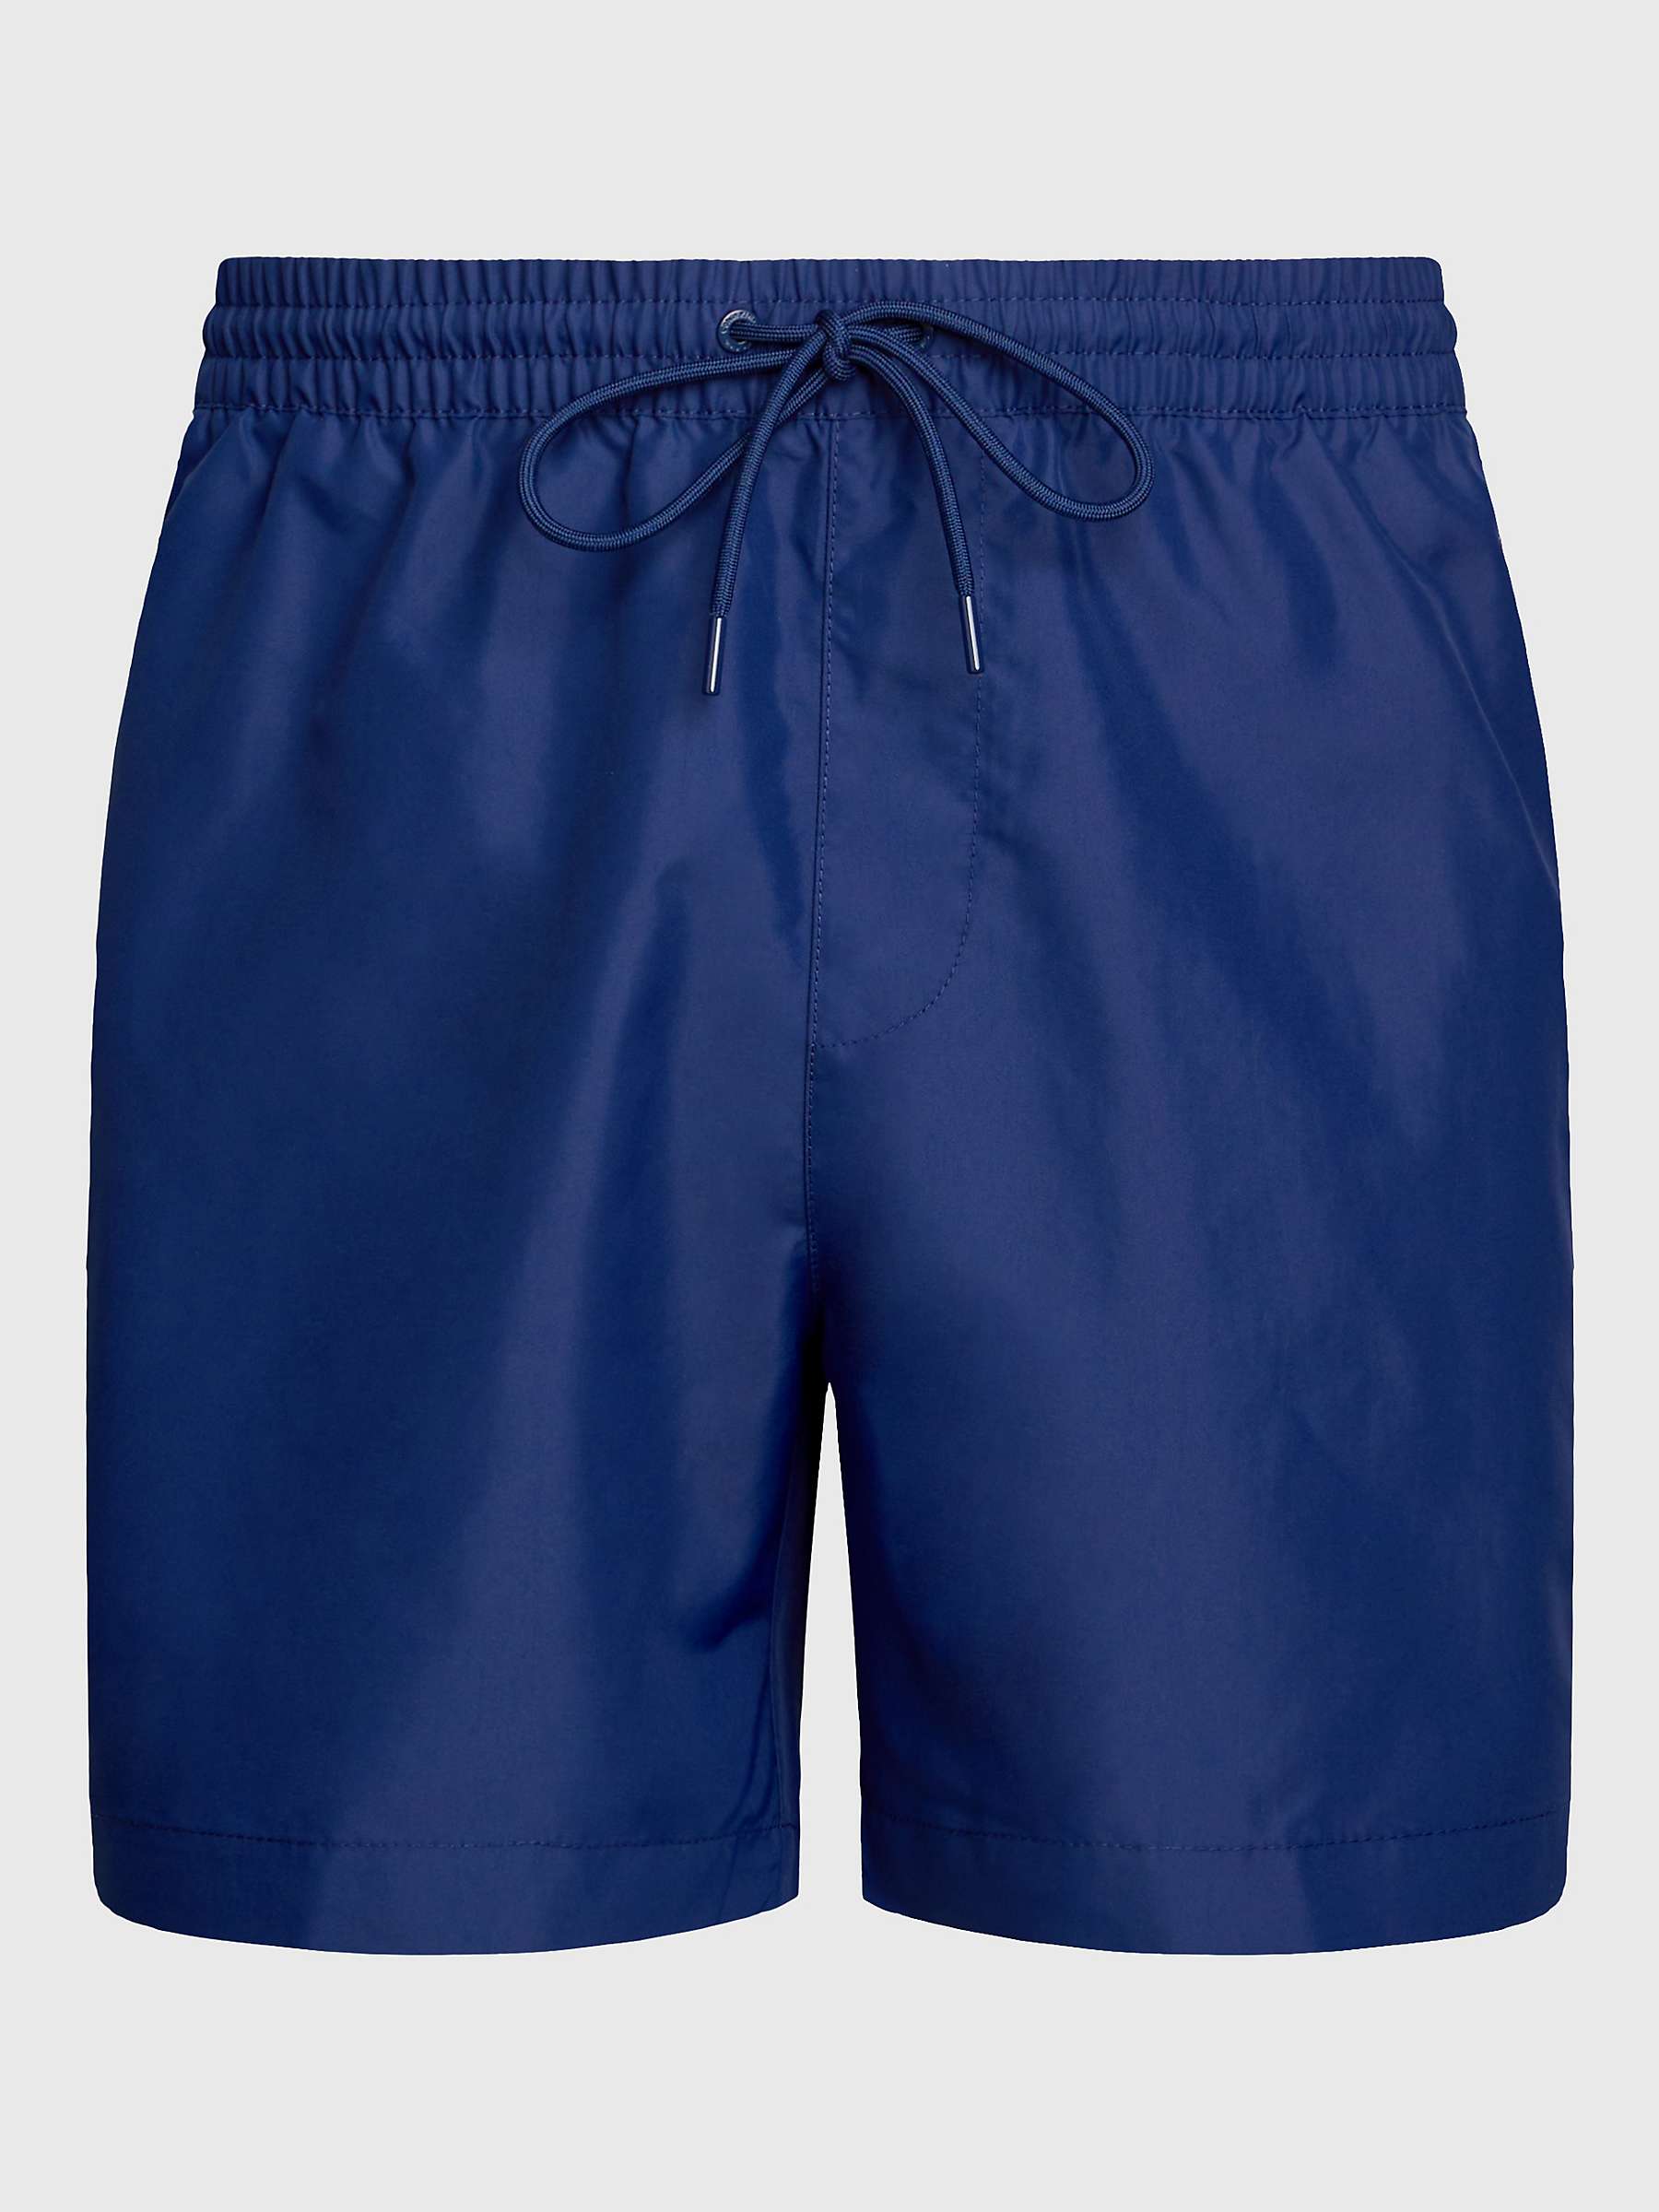 Buy Calvin Klein Drawstring Shorts, Signature Navy Online at johnlewis.com